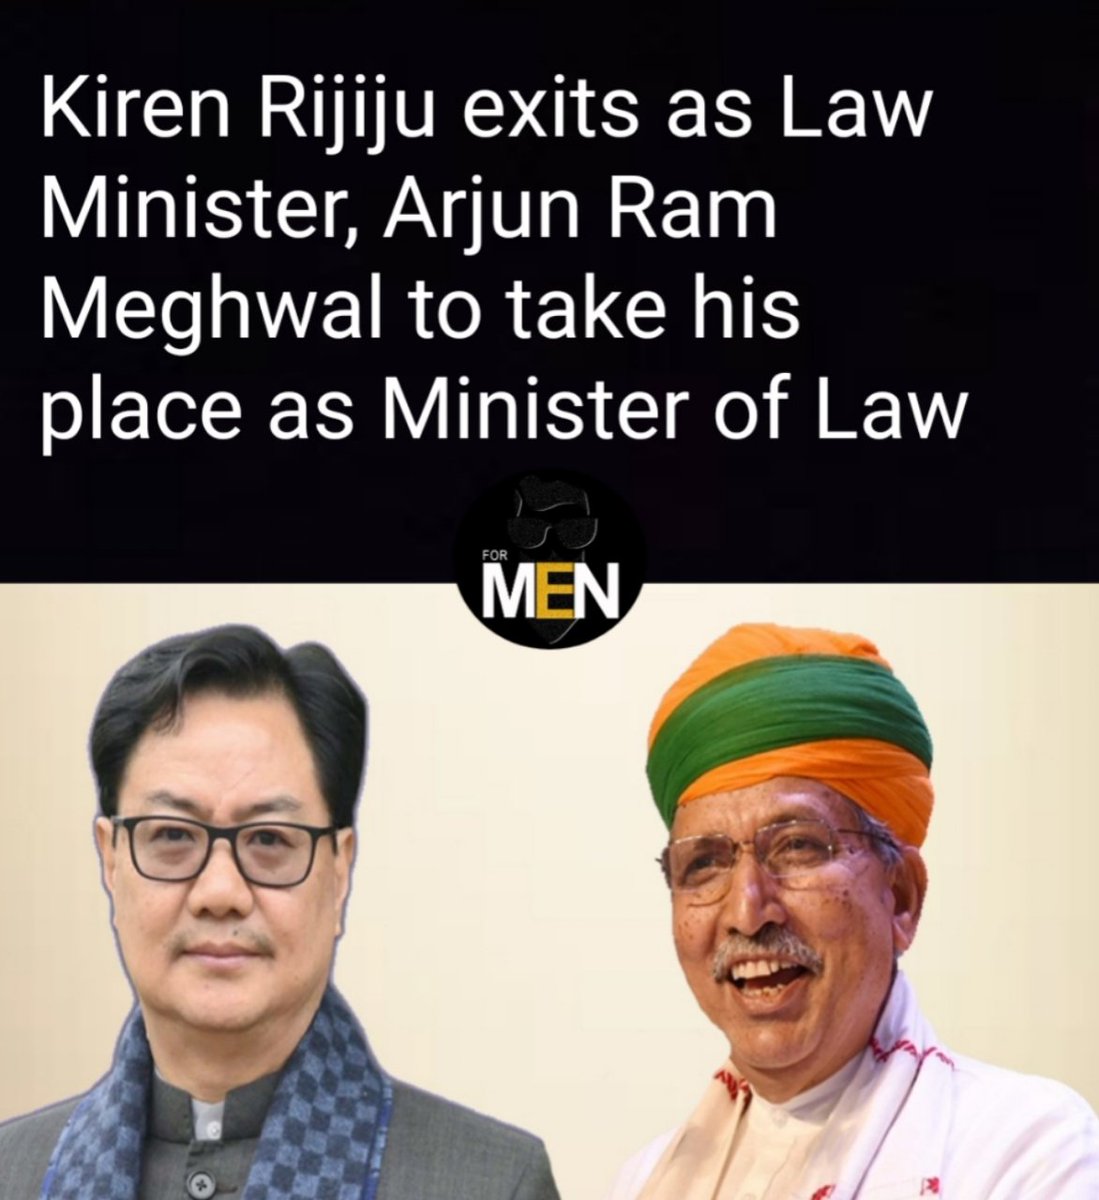 Wondering if that will make any change? 

#formenindia #menmattertoo #mentoo #law #india #KirenRijiju